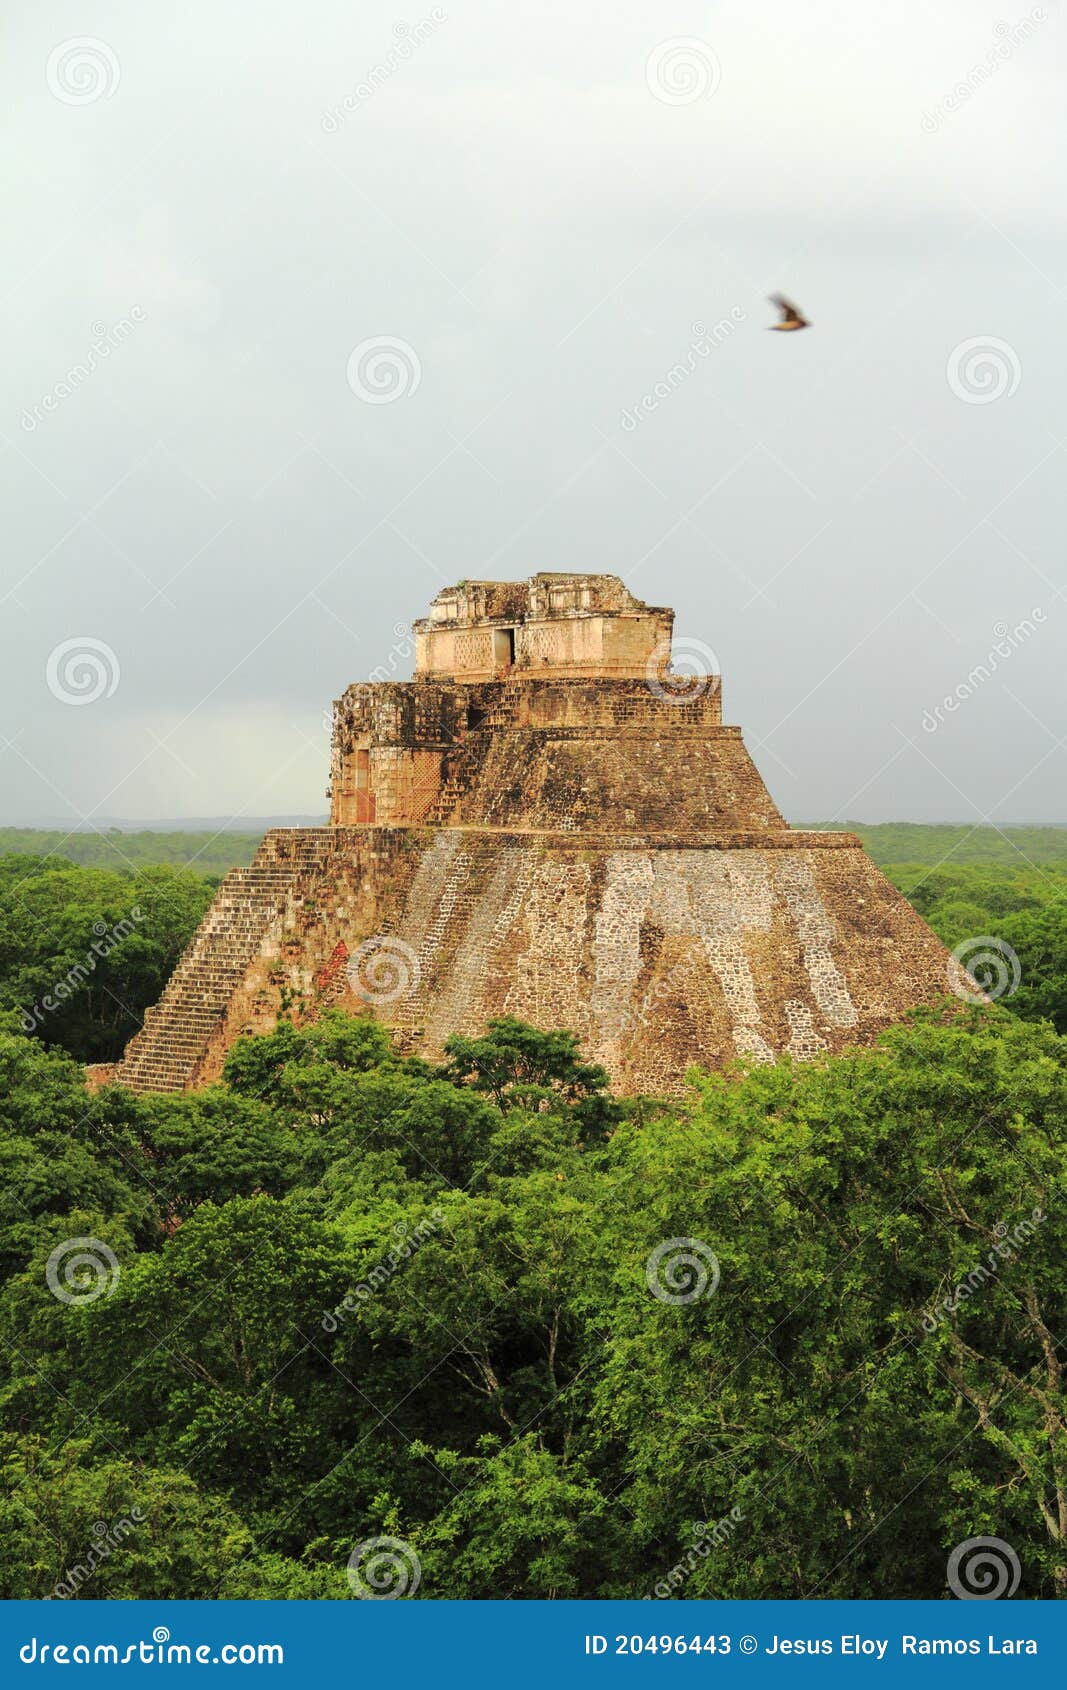 mayan pyramids in uxmal near merida yucatan mexico iii